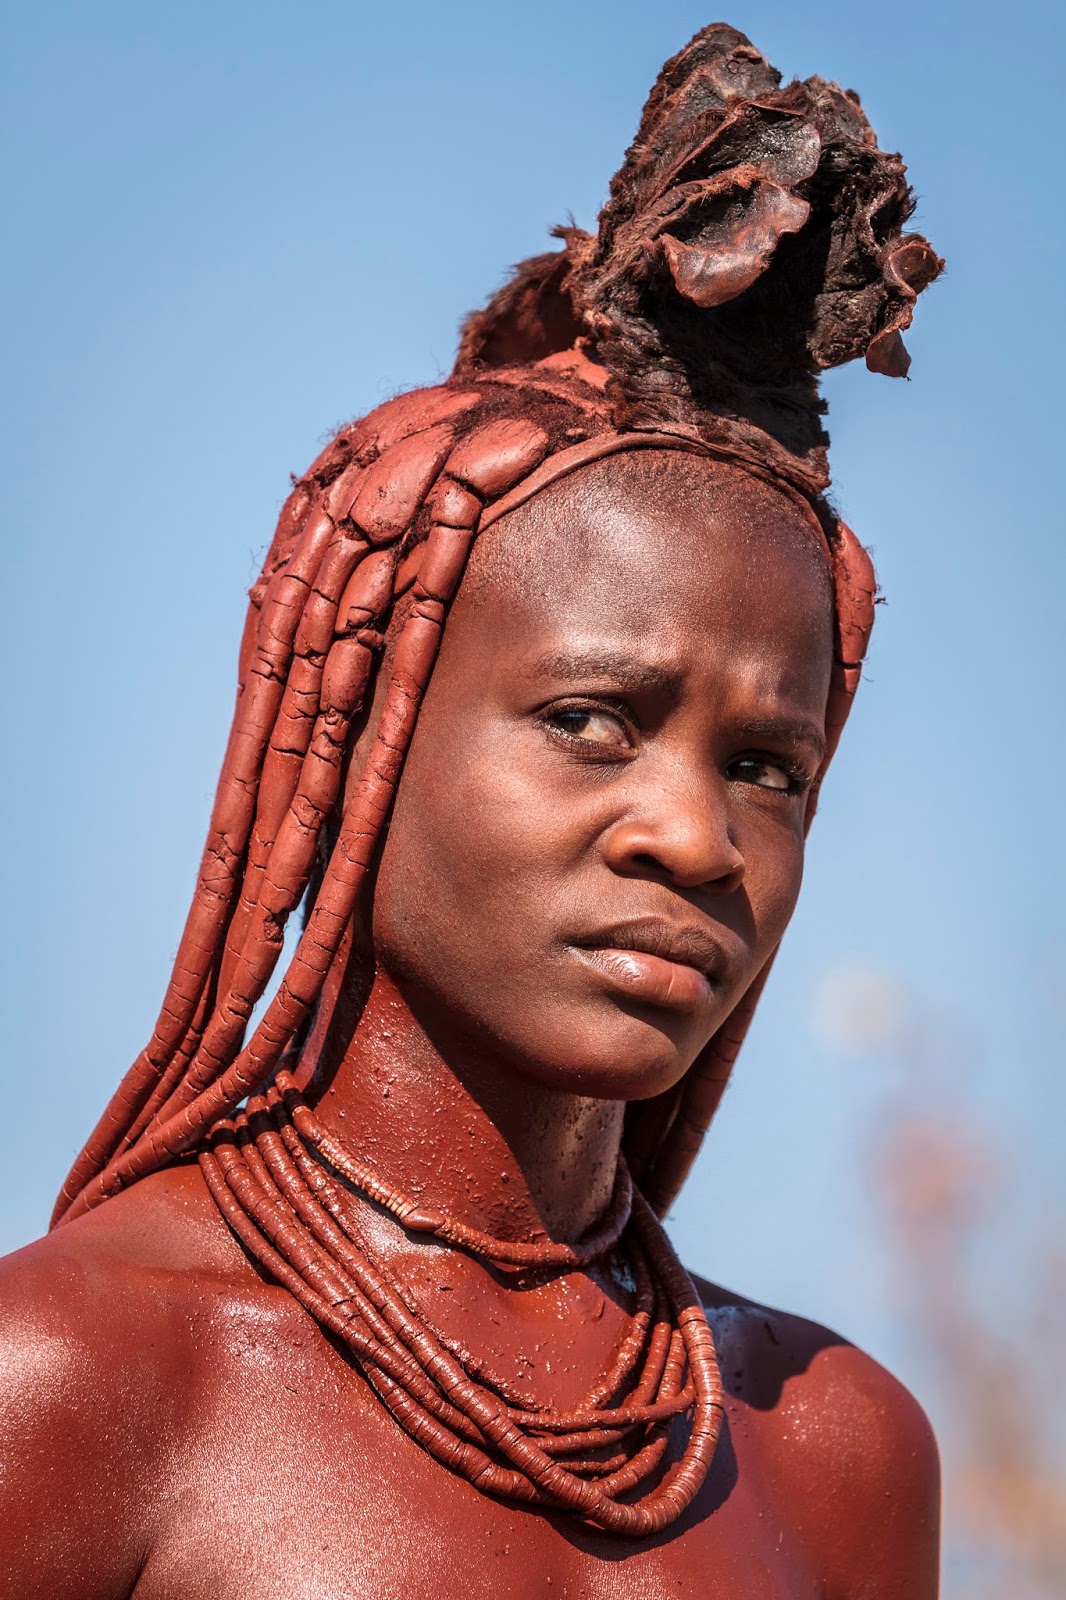 Tribe himba pro. Племя Химба. Племя Химба женщины. Племя Химба в Африке. Красавицы племени Химба Намибия.